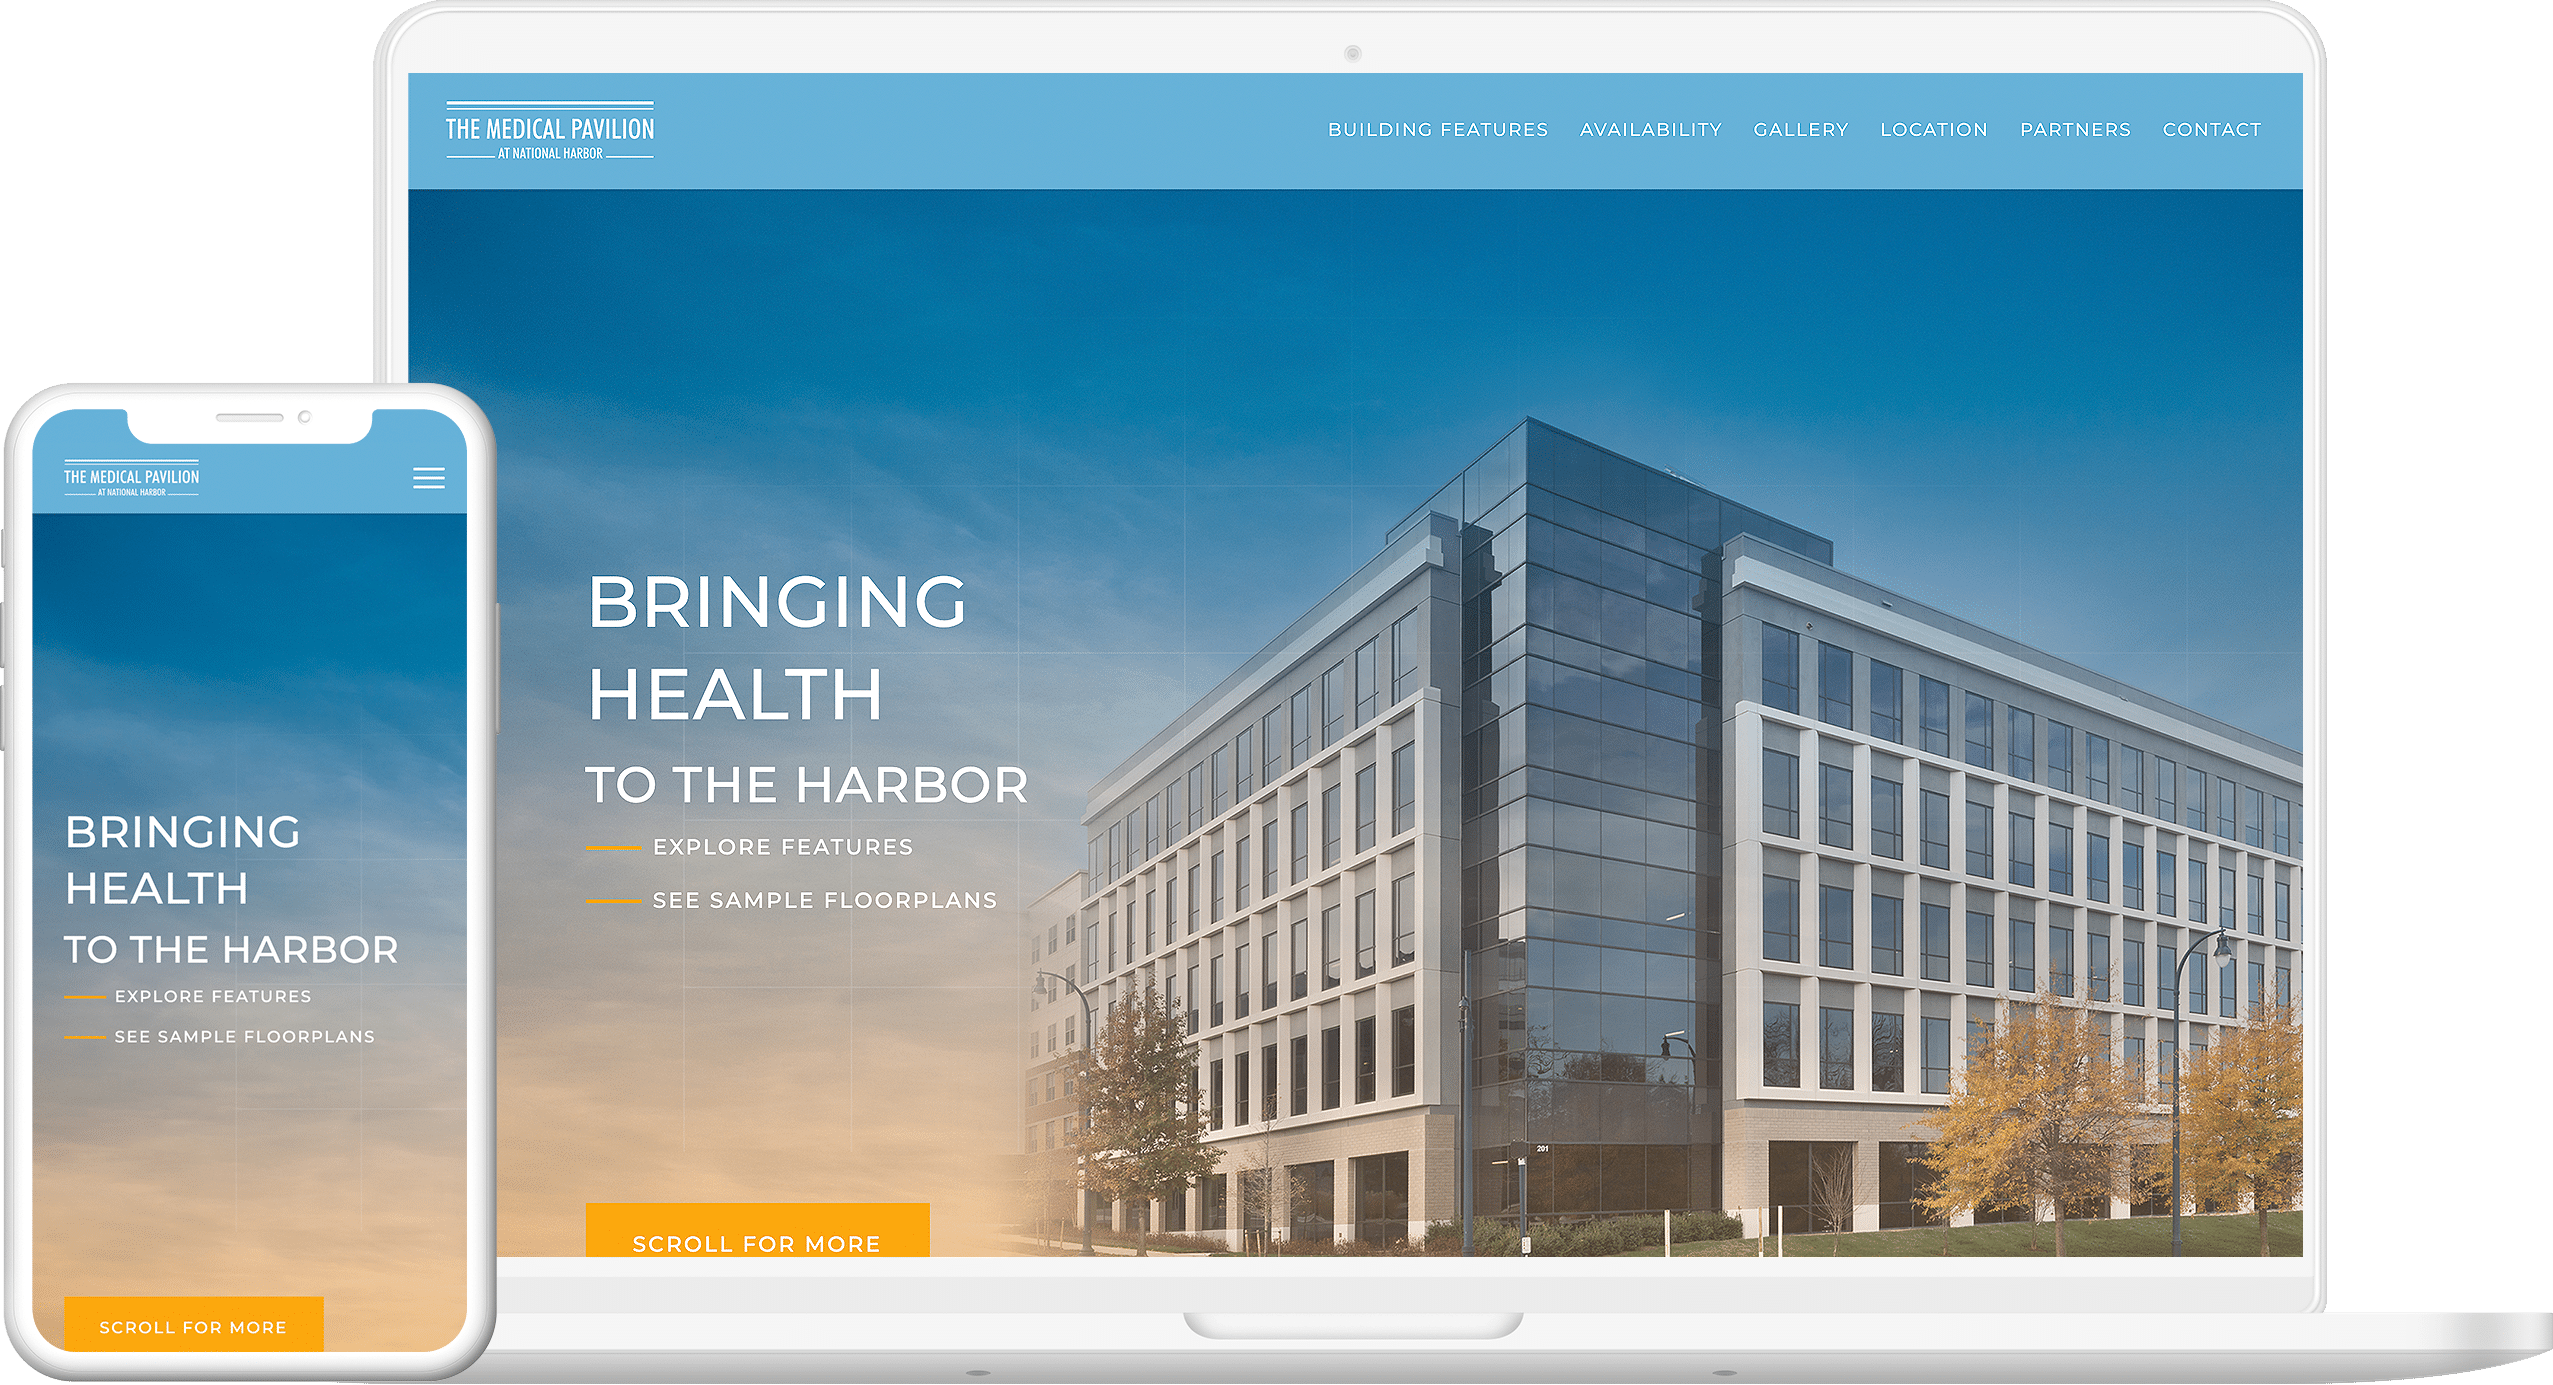 Punch -Medical Pavilion Website in Desktop and Mobile Devices